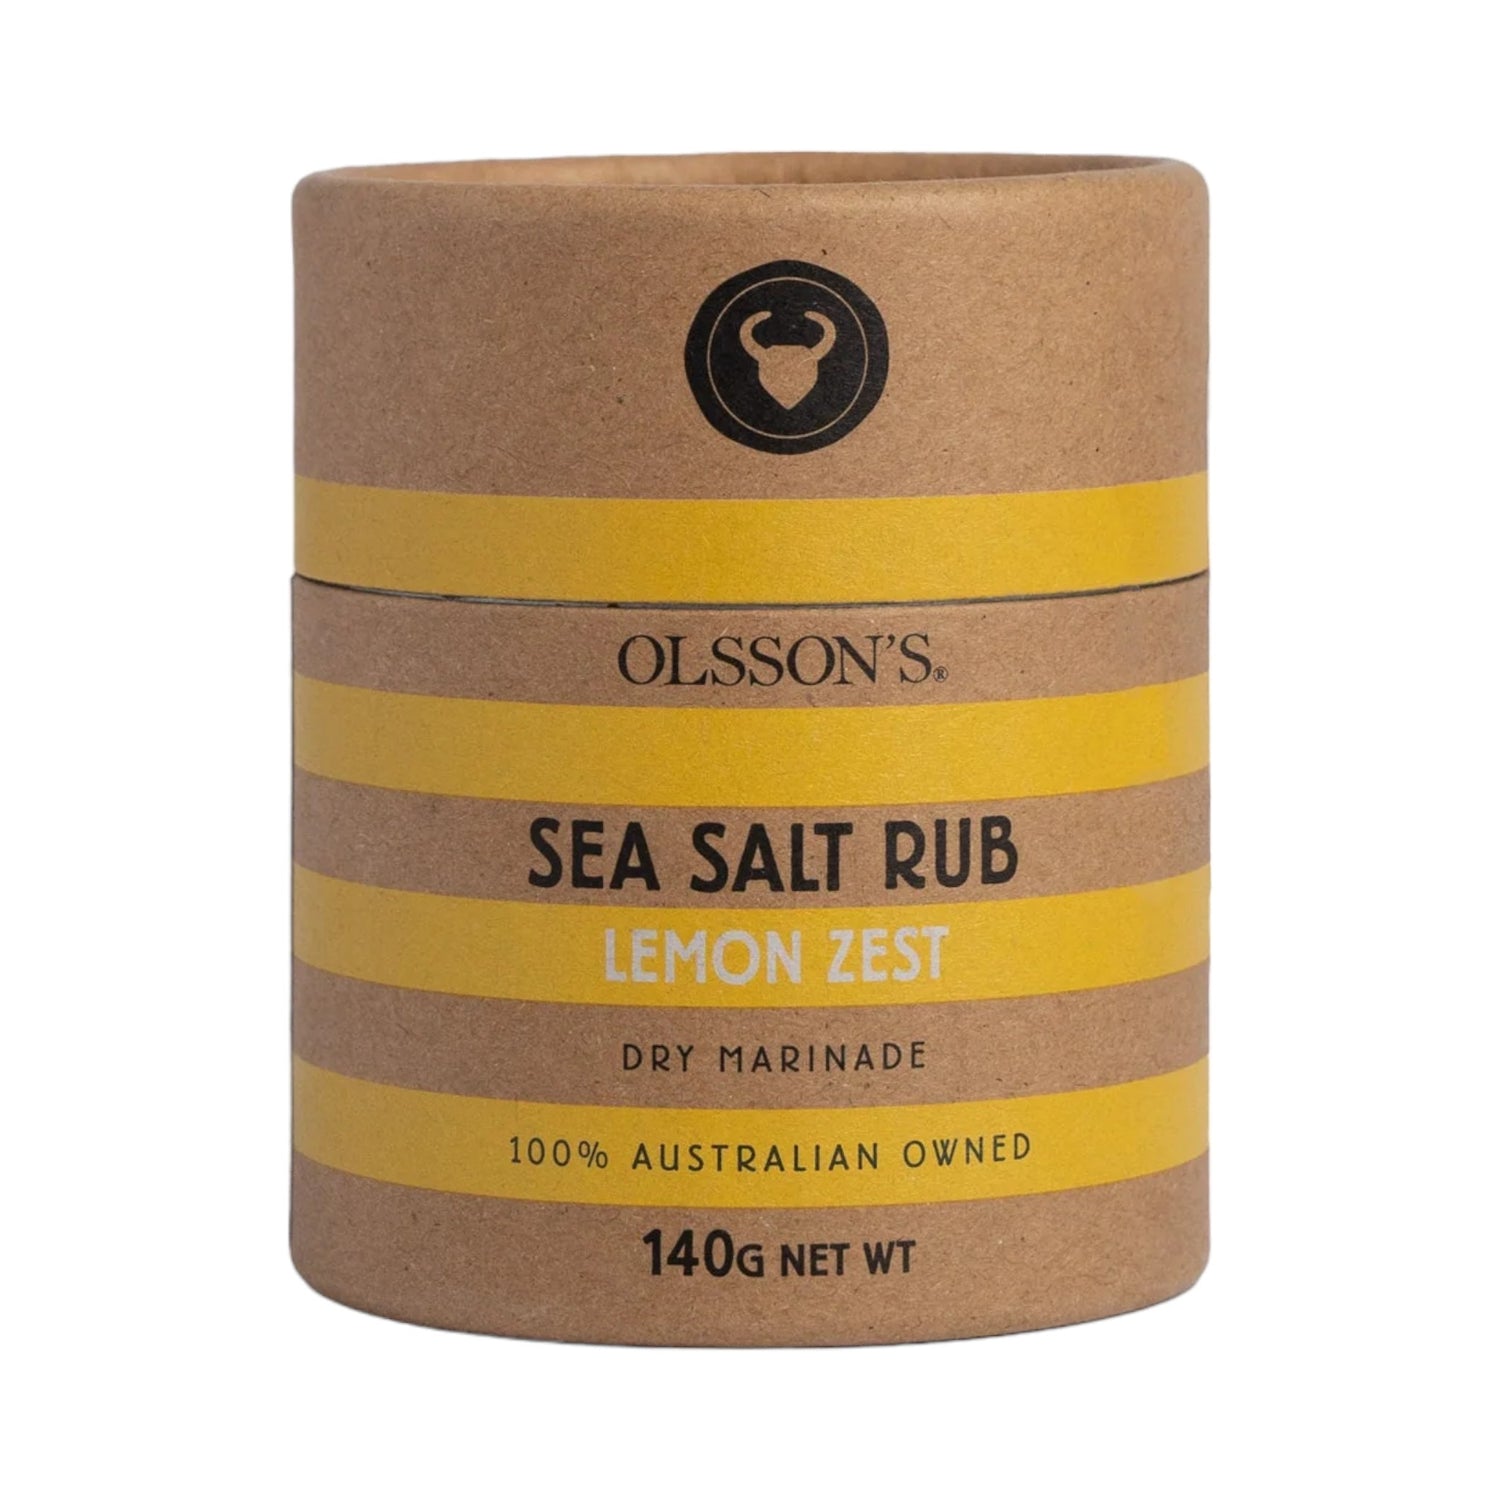 Sea Salt Rub - Lemon Zest